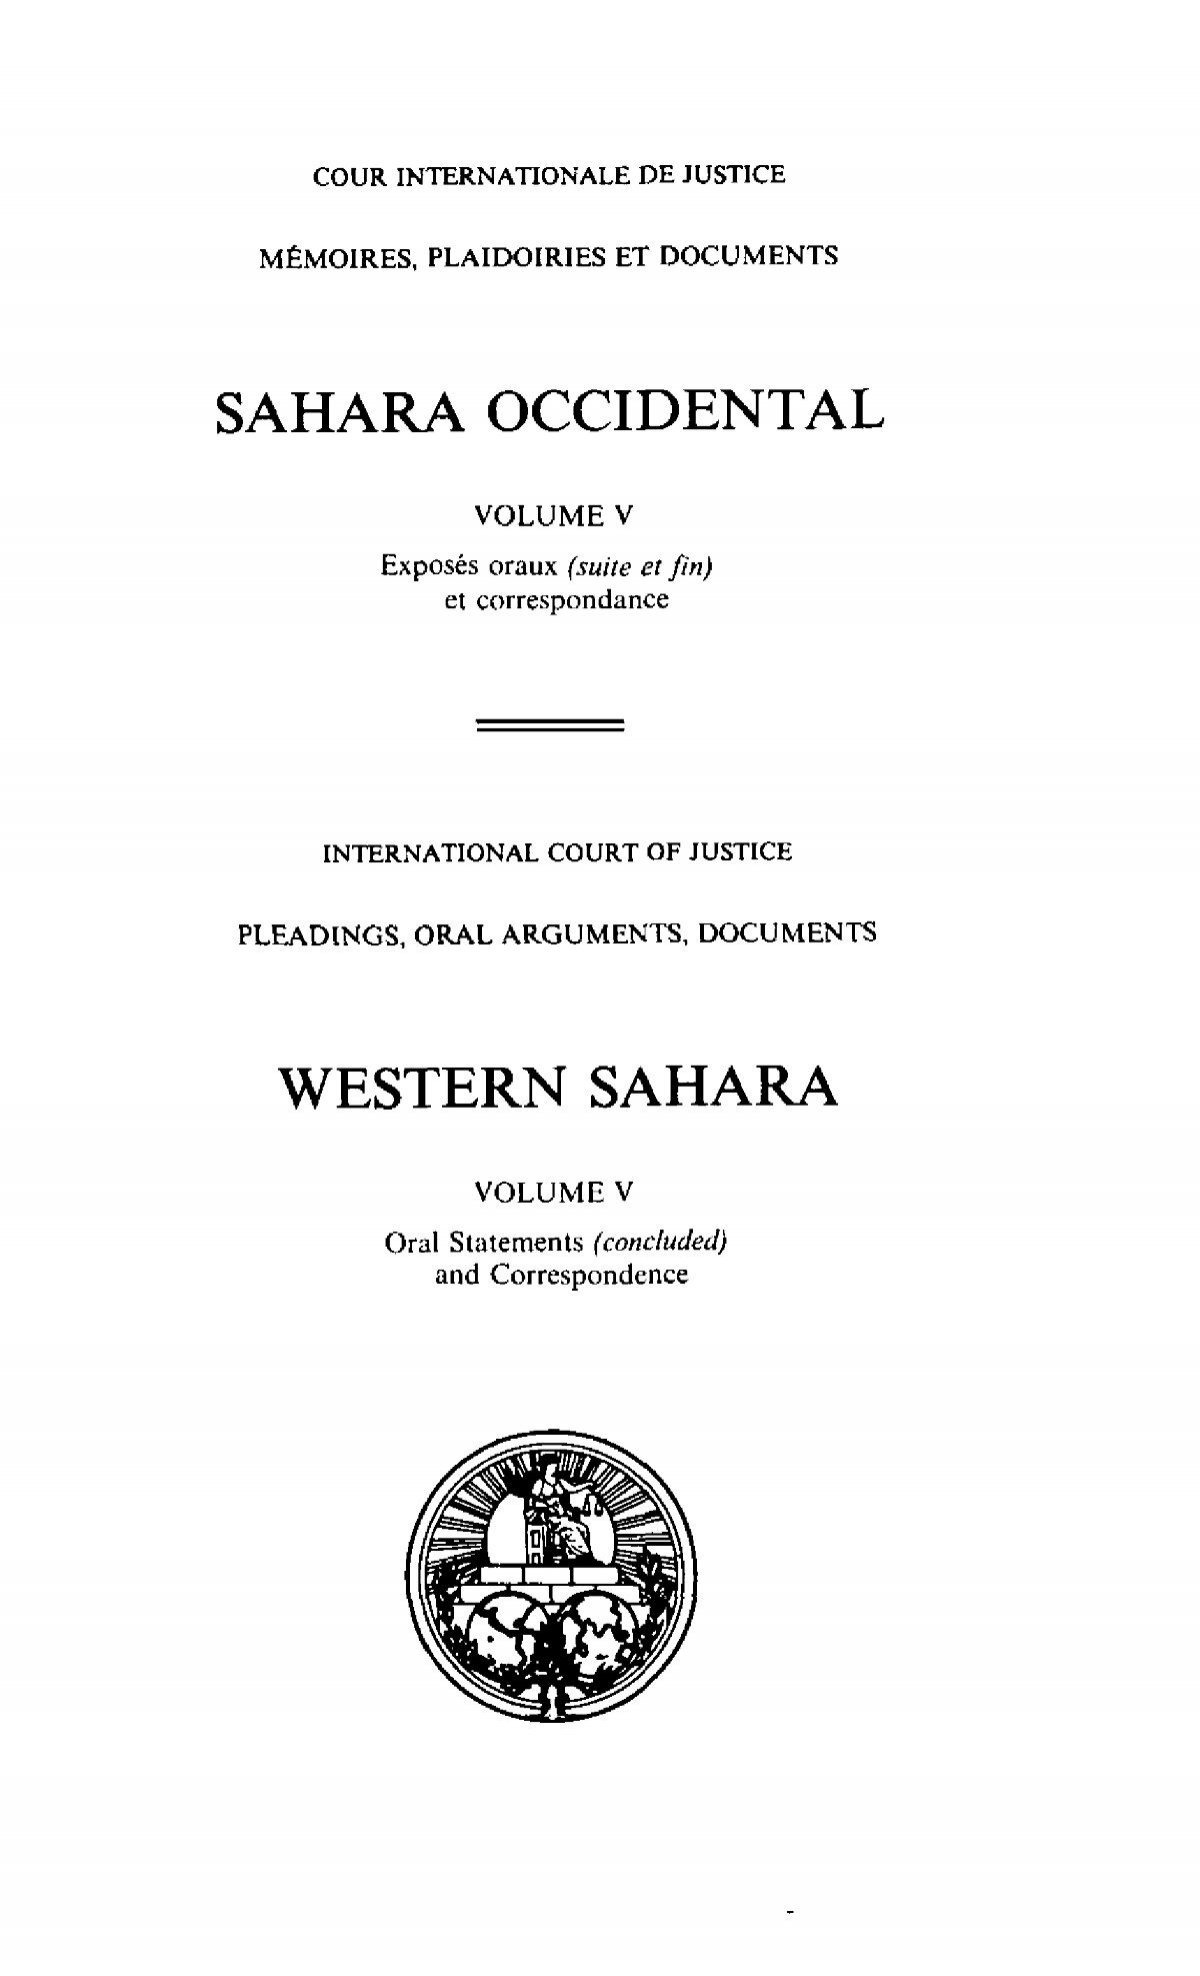 sahara occidental western sahara cour international de justice